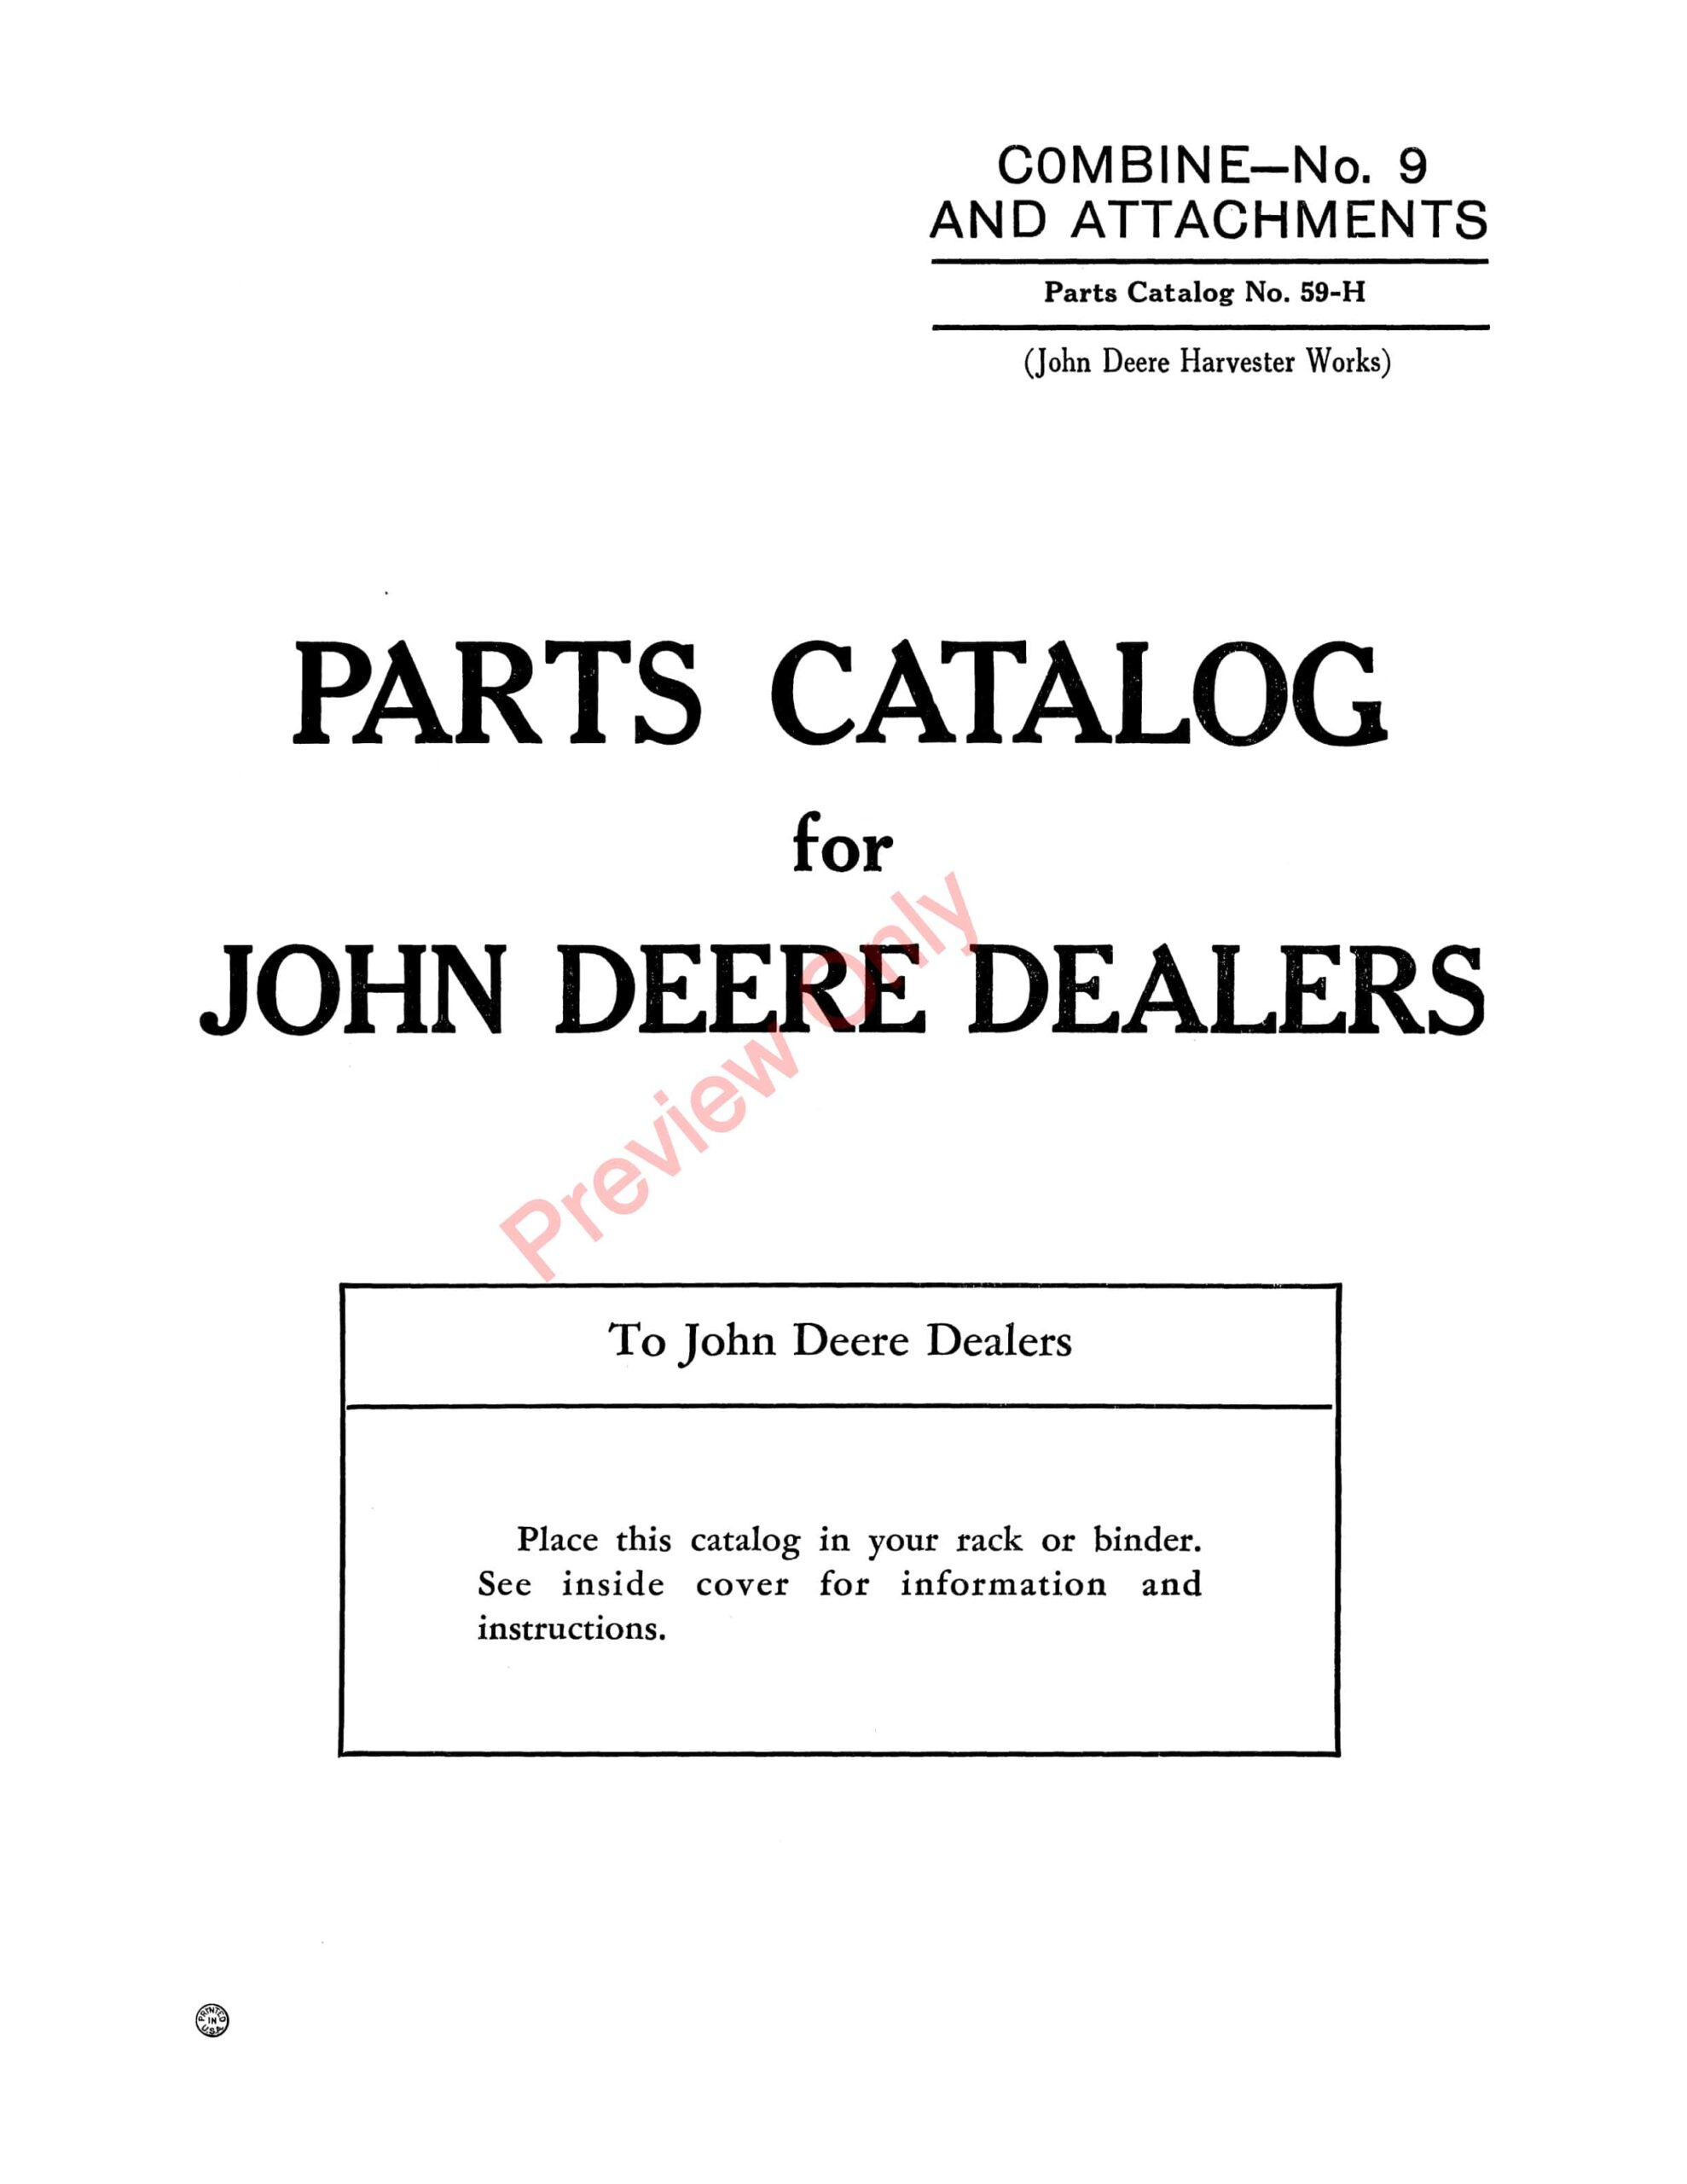 John Deere 9 Combine Parts Catalog CAT59H 15JUN46-1